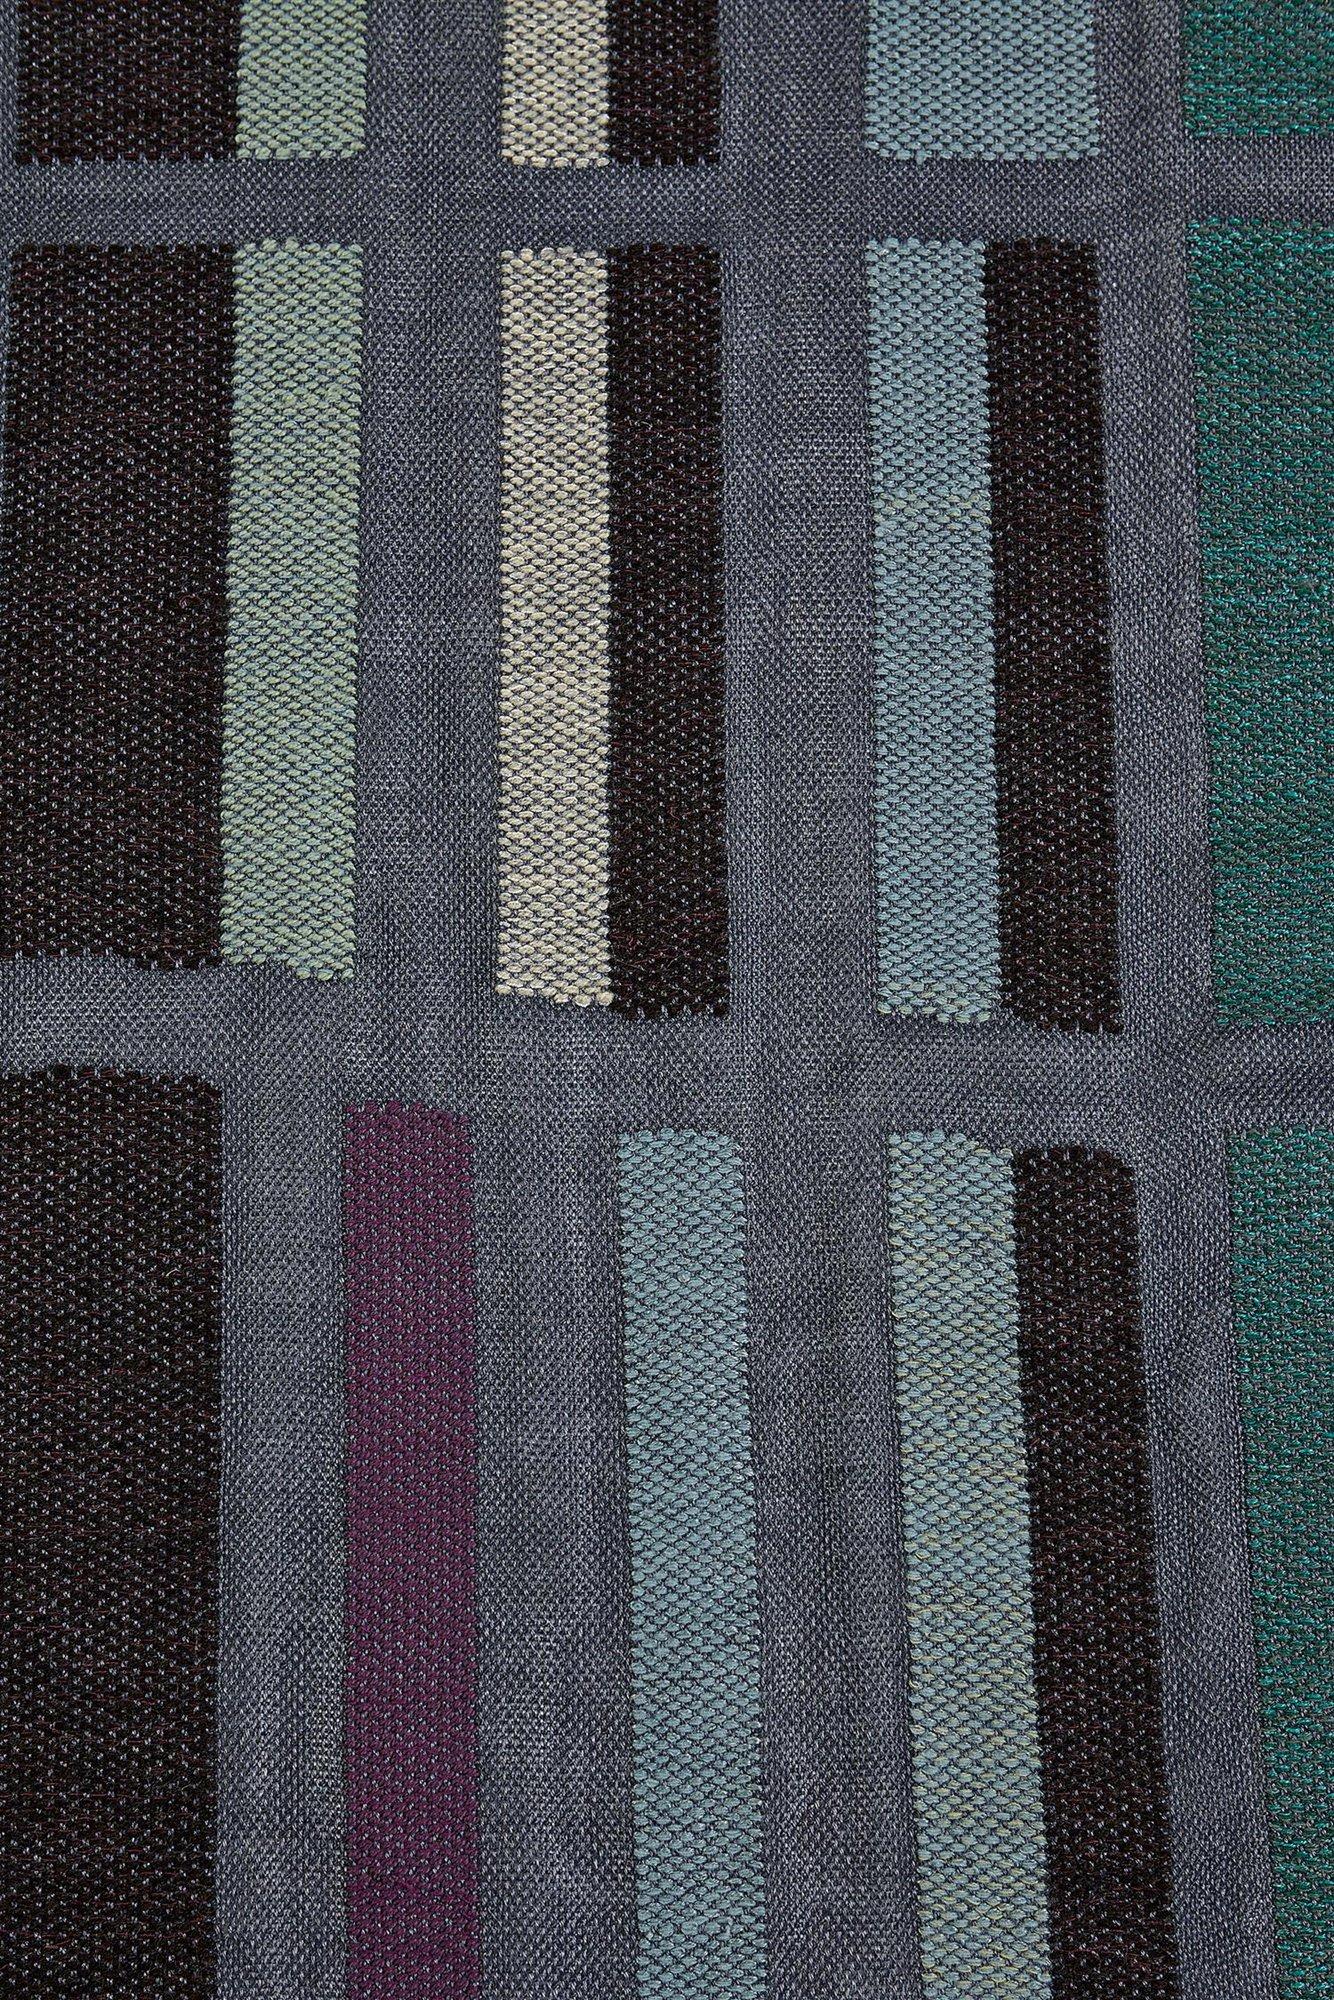 Tapestry, anonymous, Sweden, 1950s.
Handwoven wool.

Purchased from Handarbetets vänner.

L: 195 cm/ 76''
W: 118 cm/ 46 1/2''